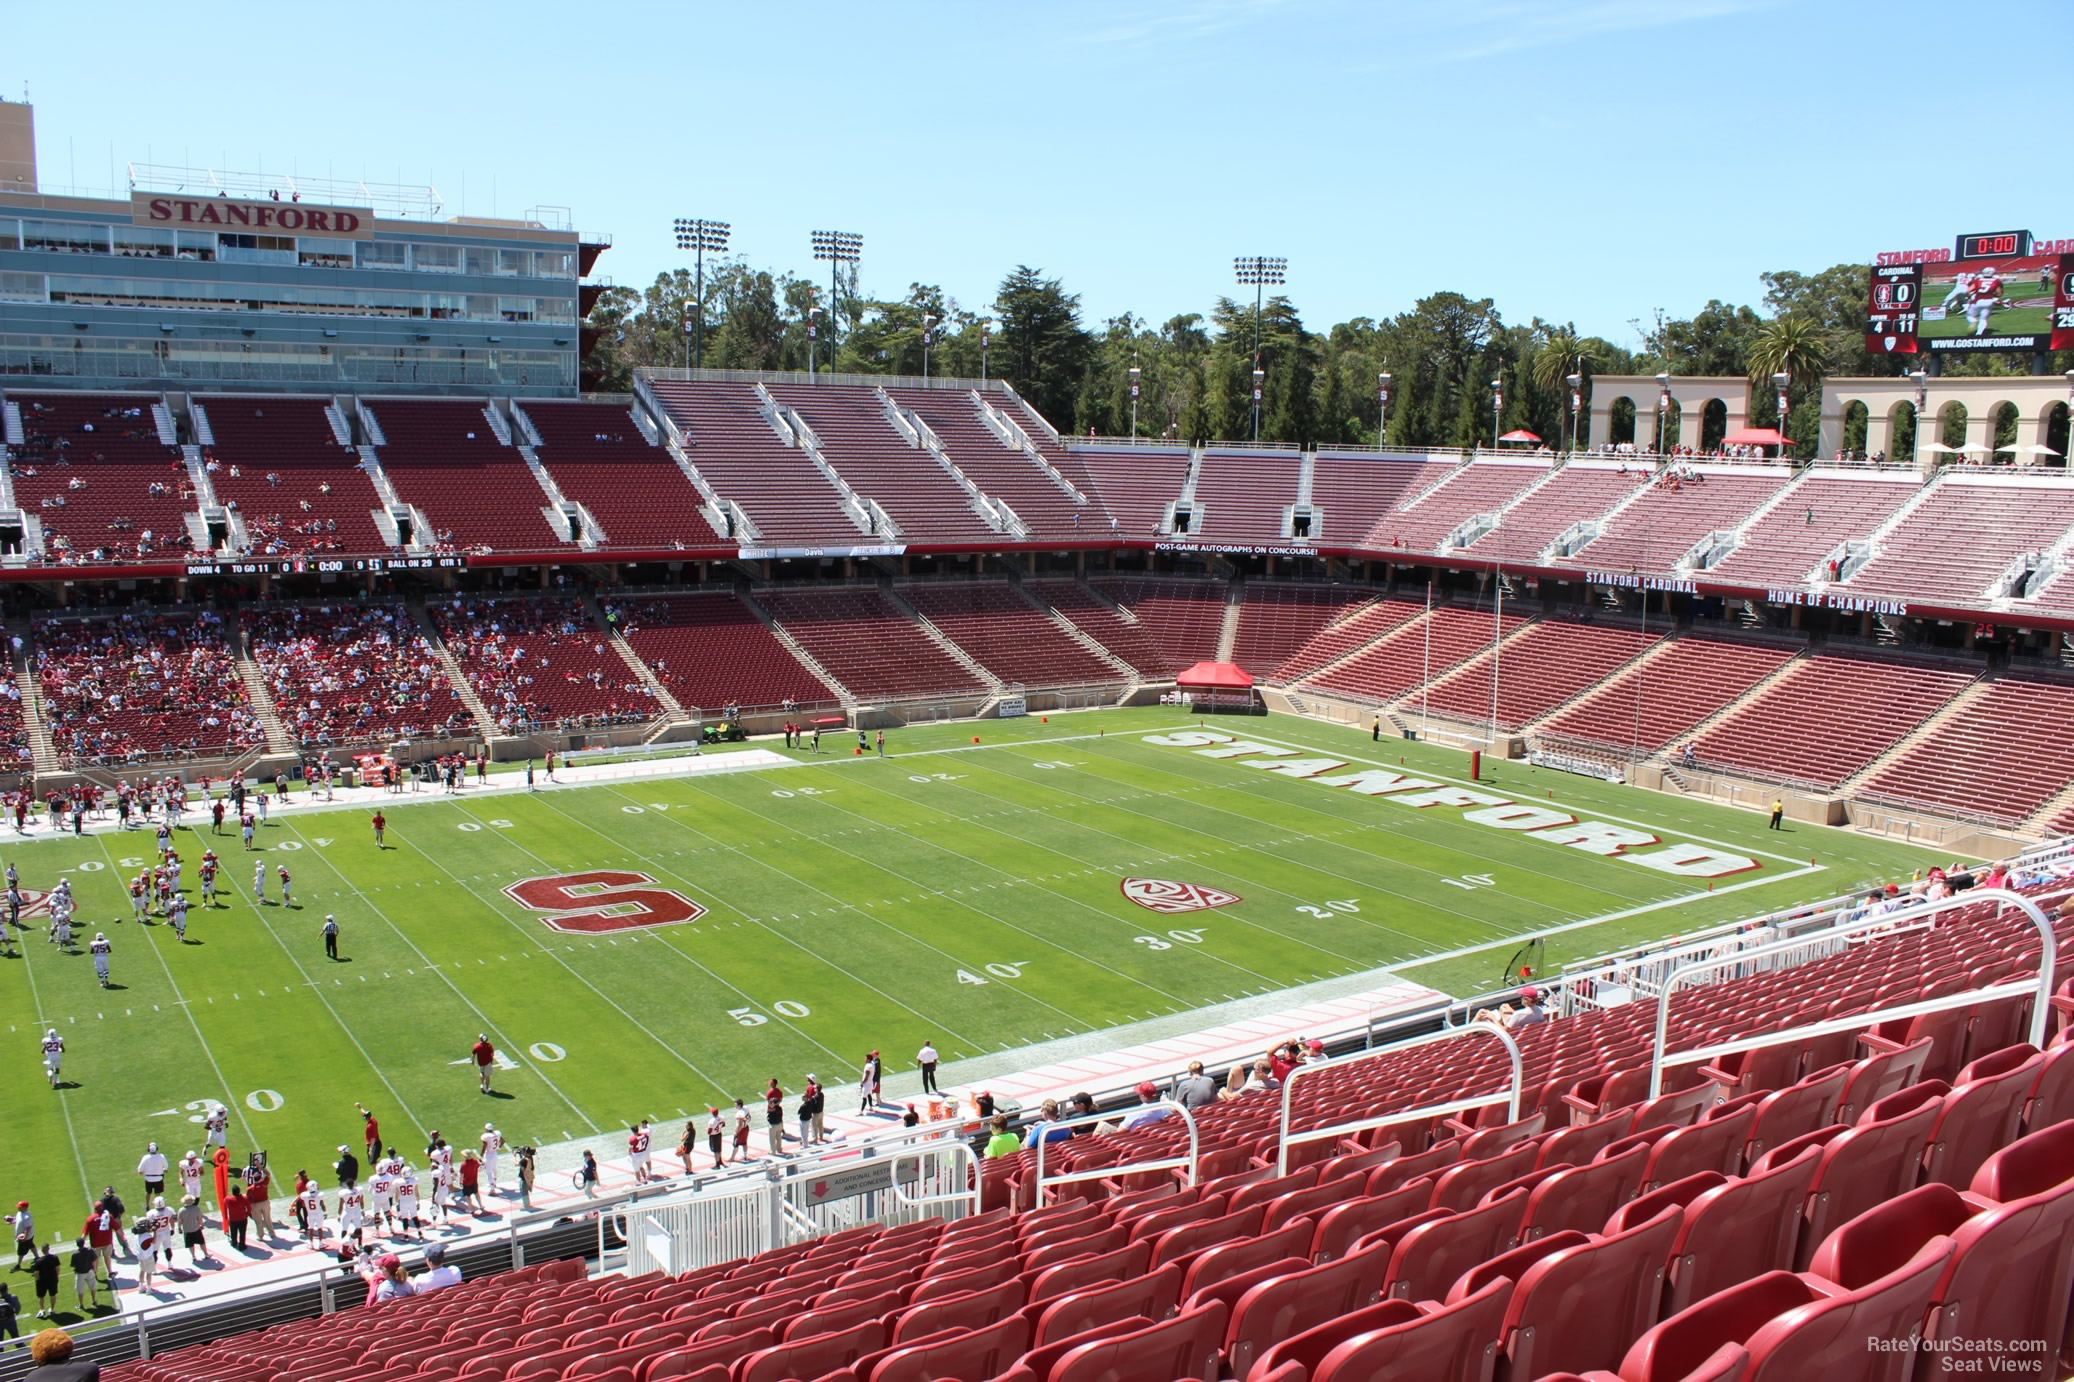 Stanford Football Stadium Seating Chart